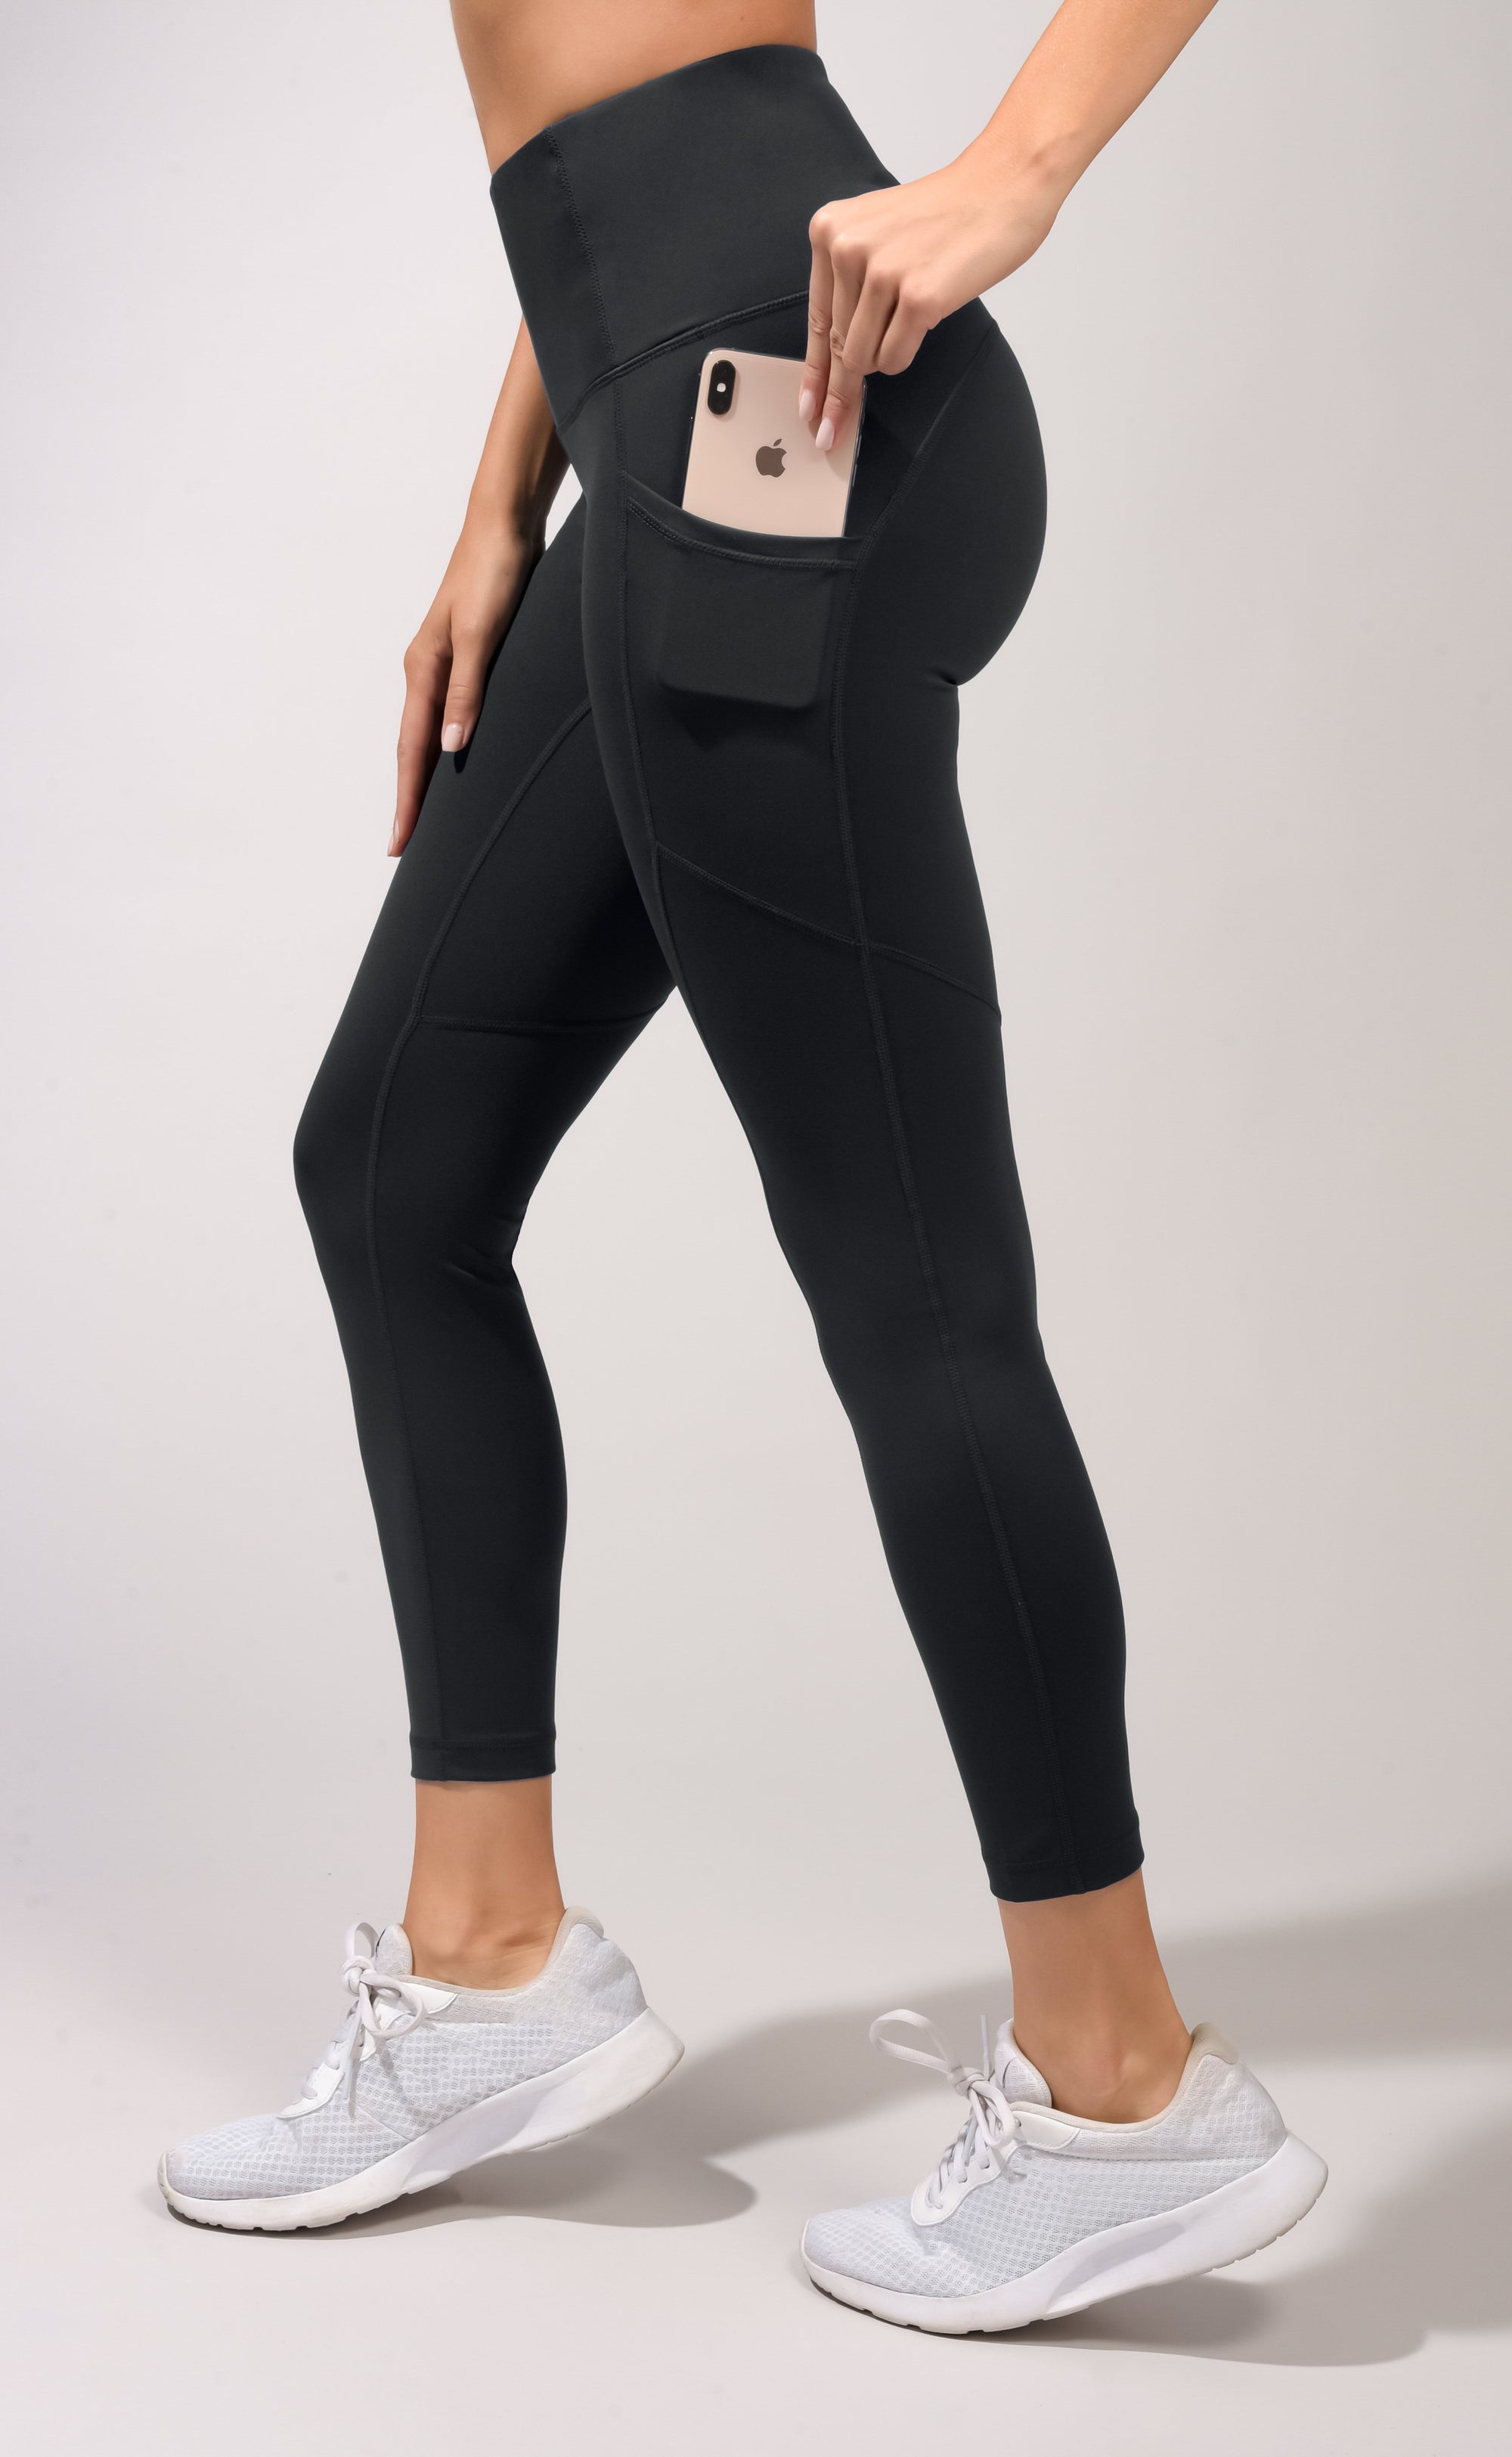 Yogalicious Lux (NWT) black high waist leggings